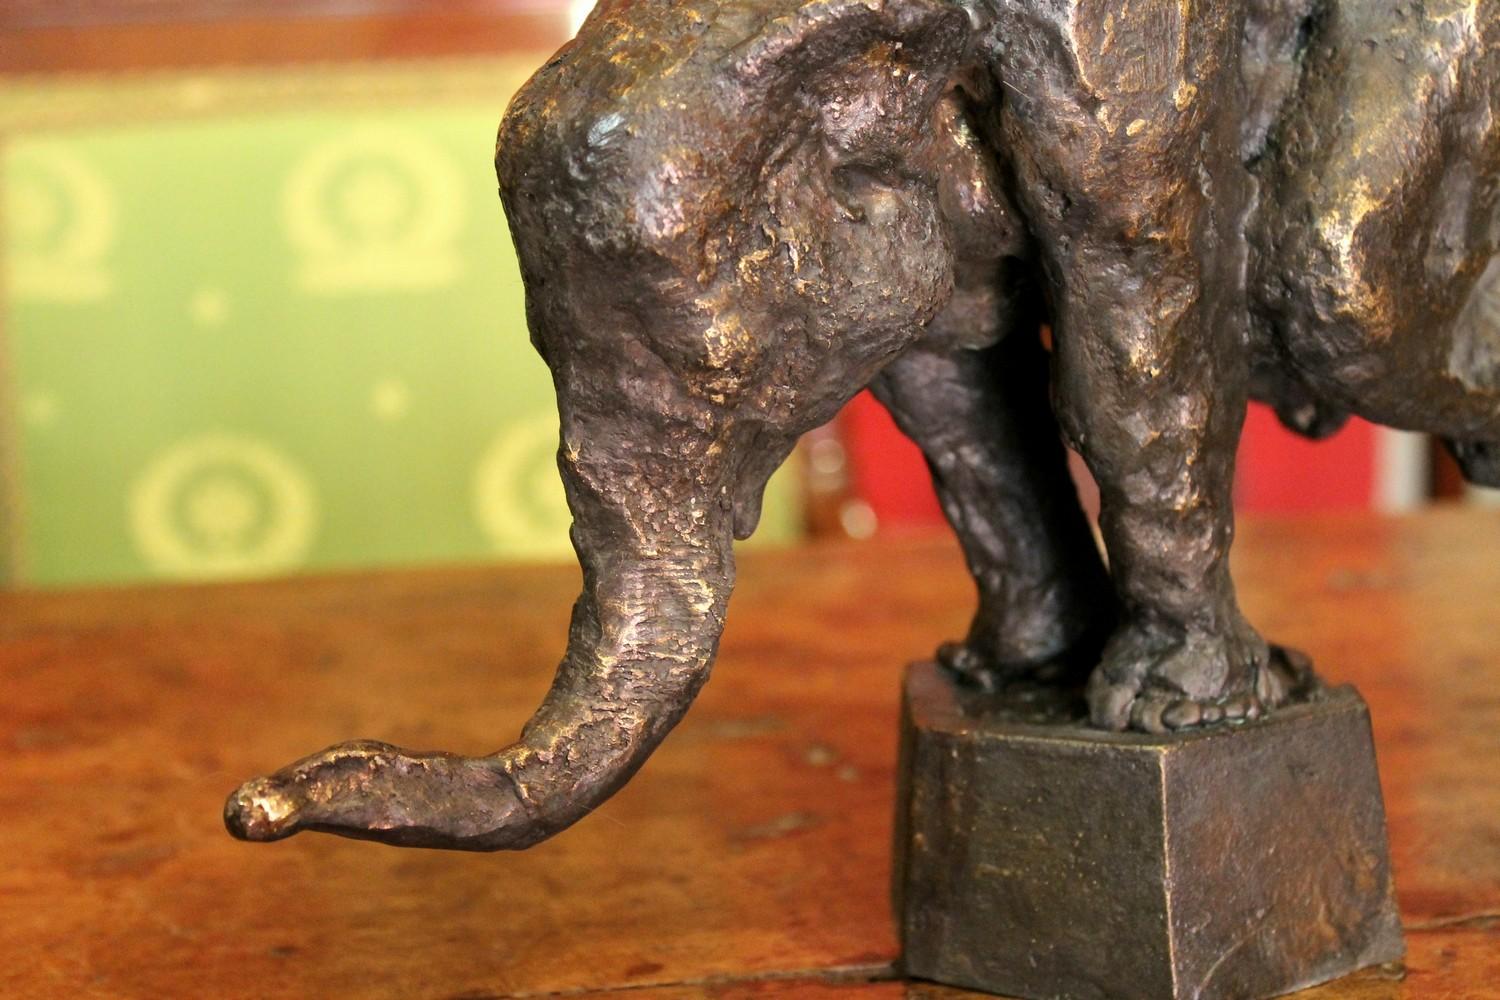 Elephant on Iron Pedestal, Lost Wax Casting Parcel-Gilt Patina Bronze Sculpture 9